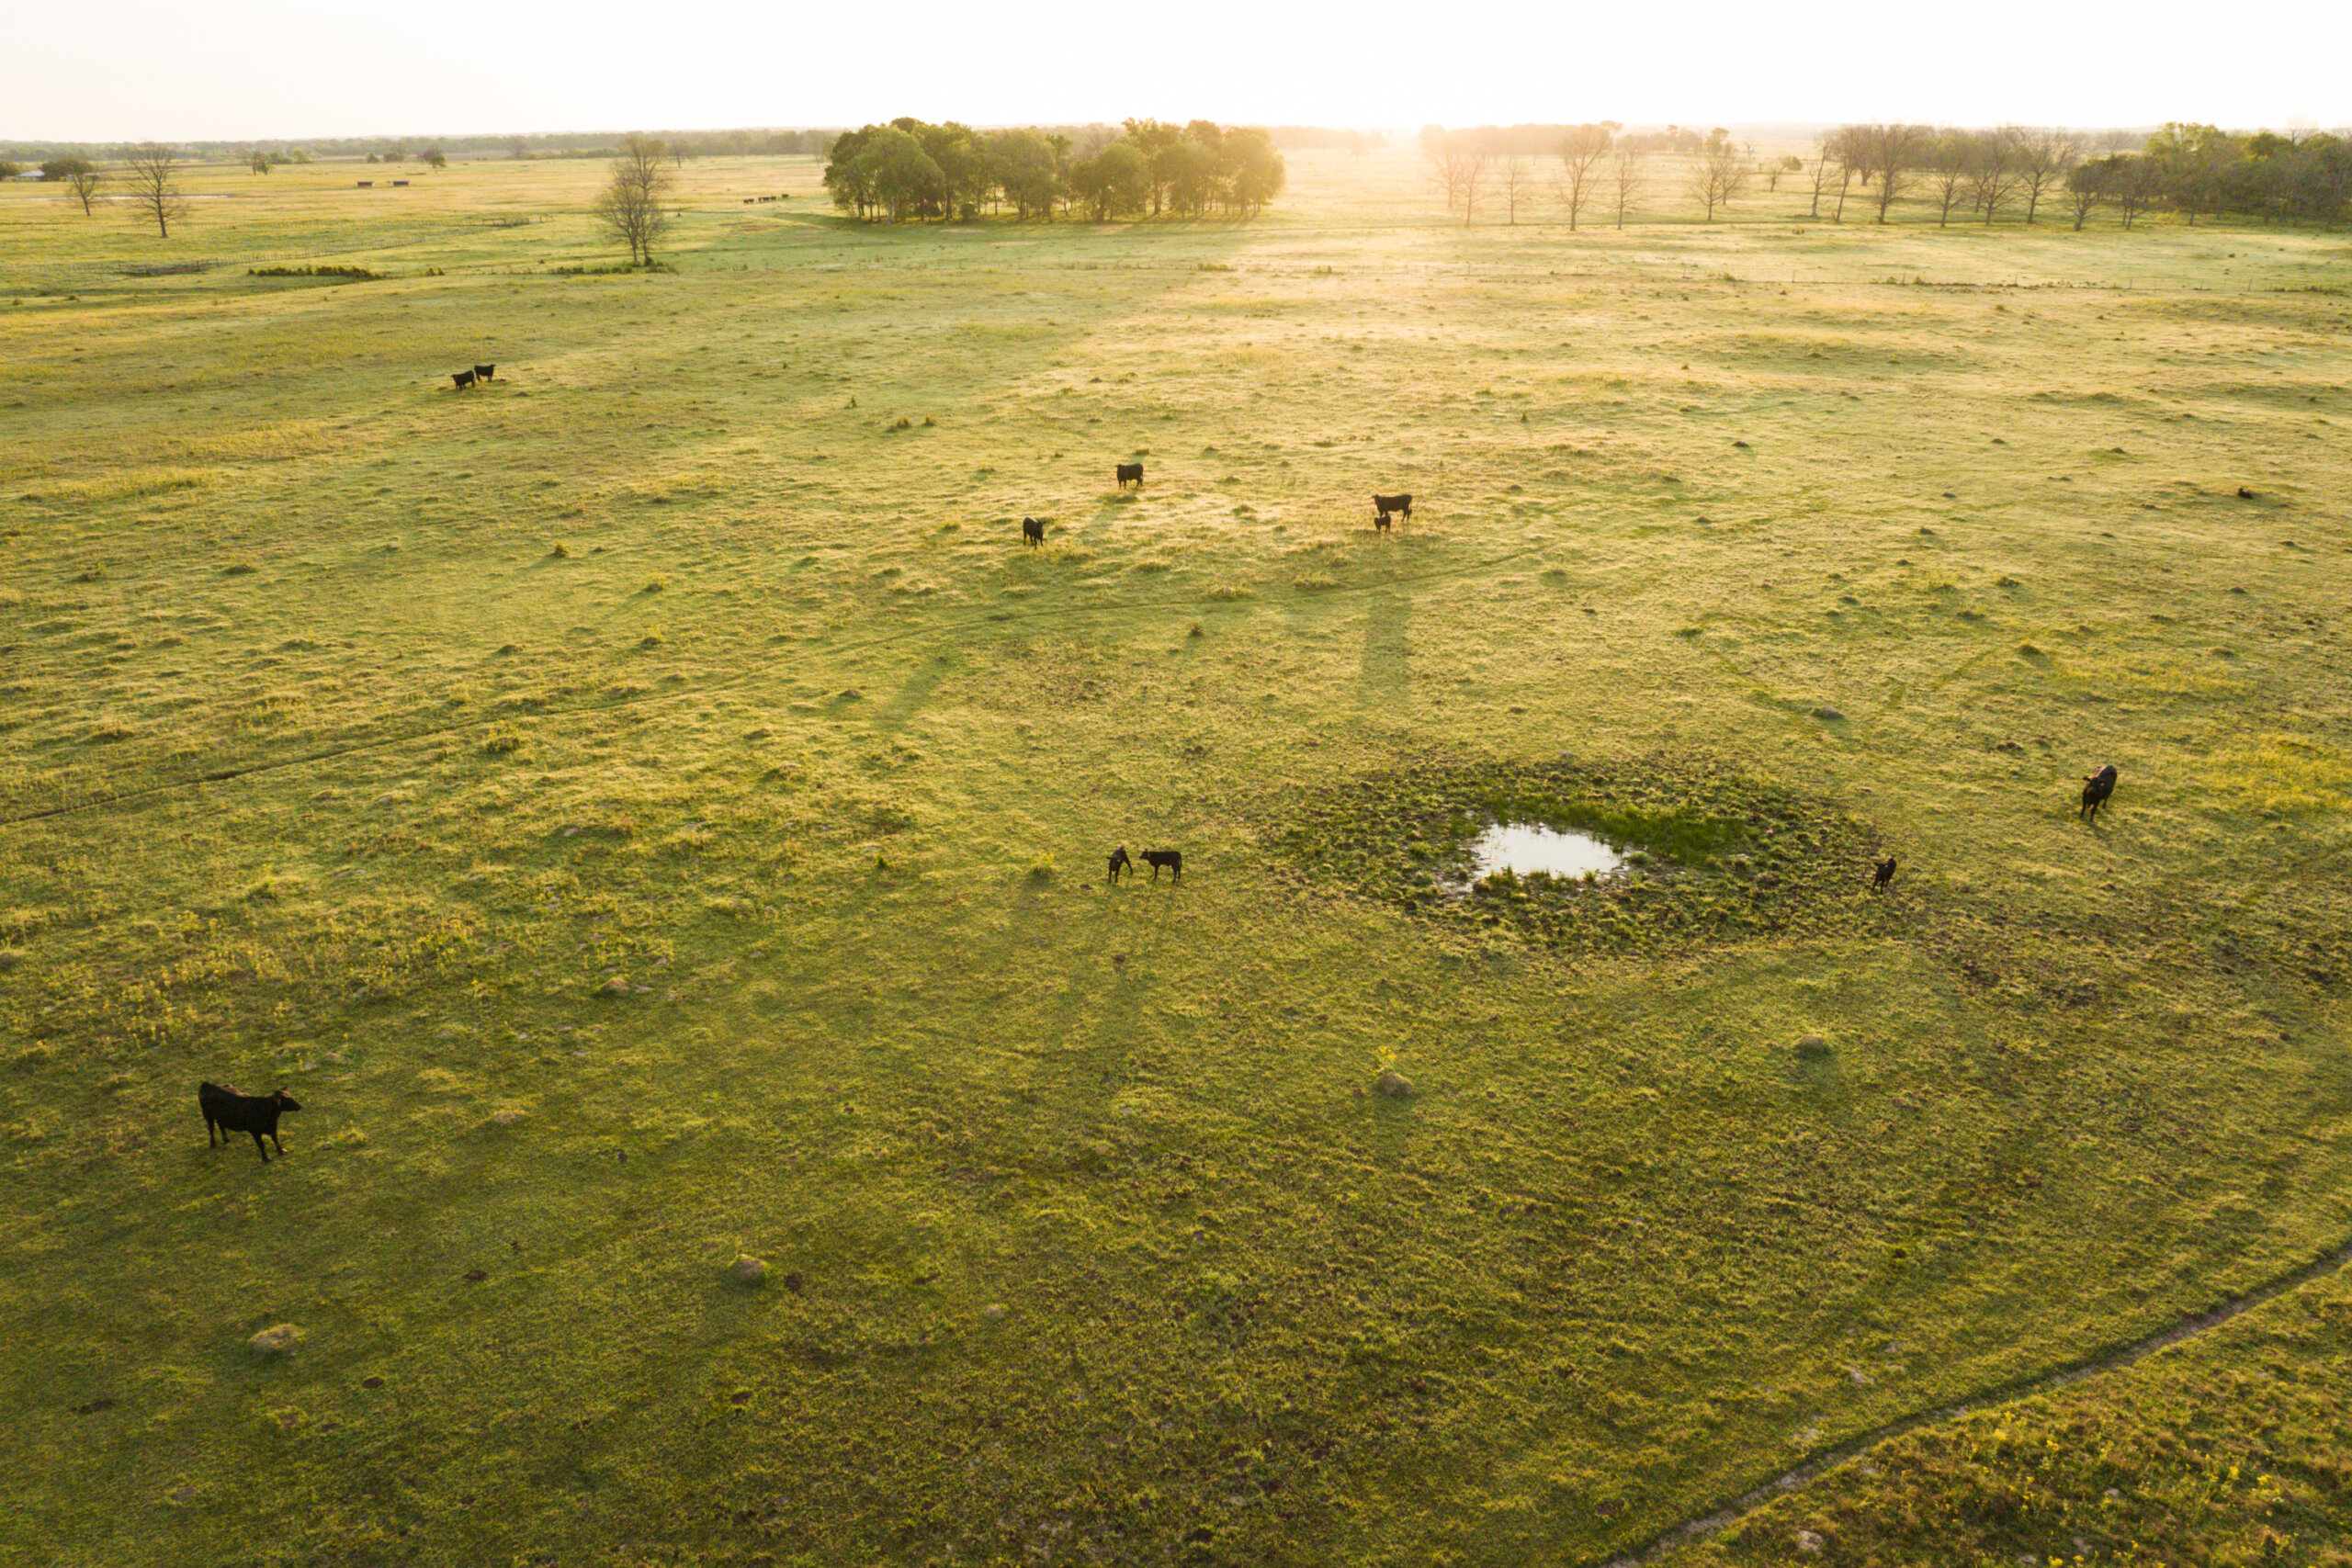 Brangus cattle on open pasture in east Texas